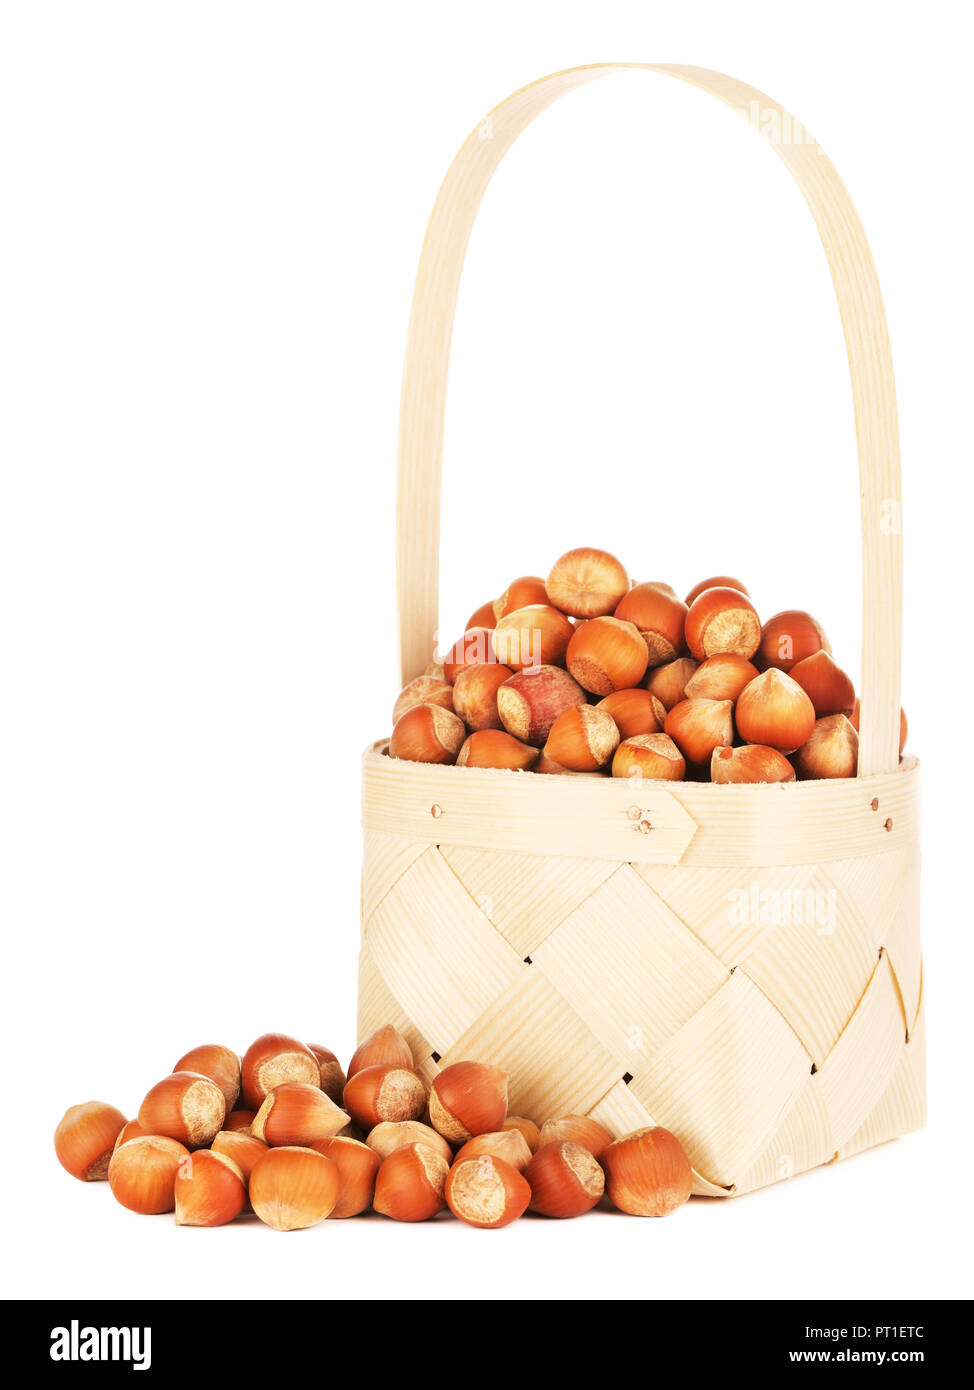 hazelnuts in wooden basket, isolated on white background Stock Photo